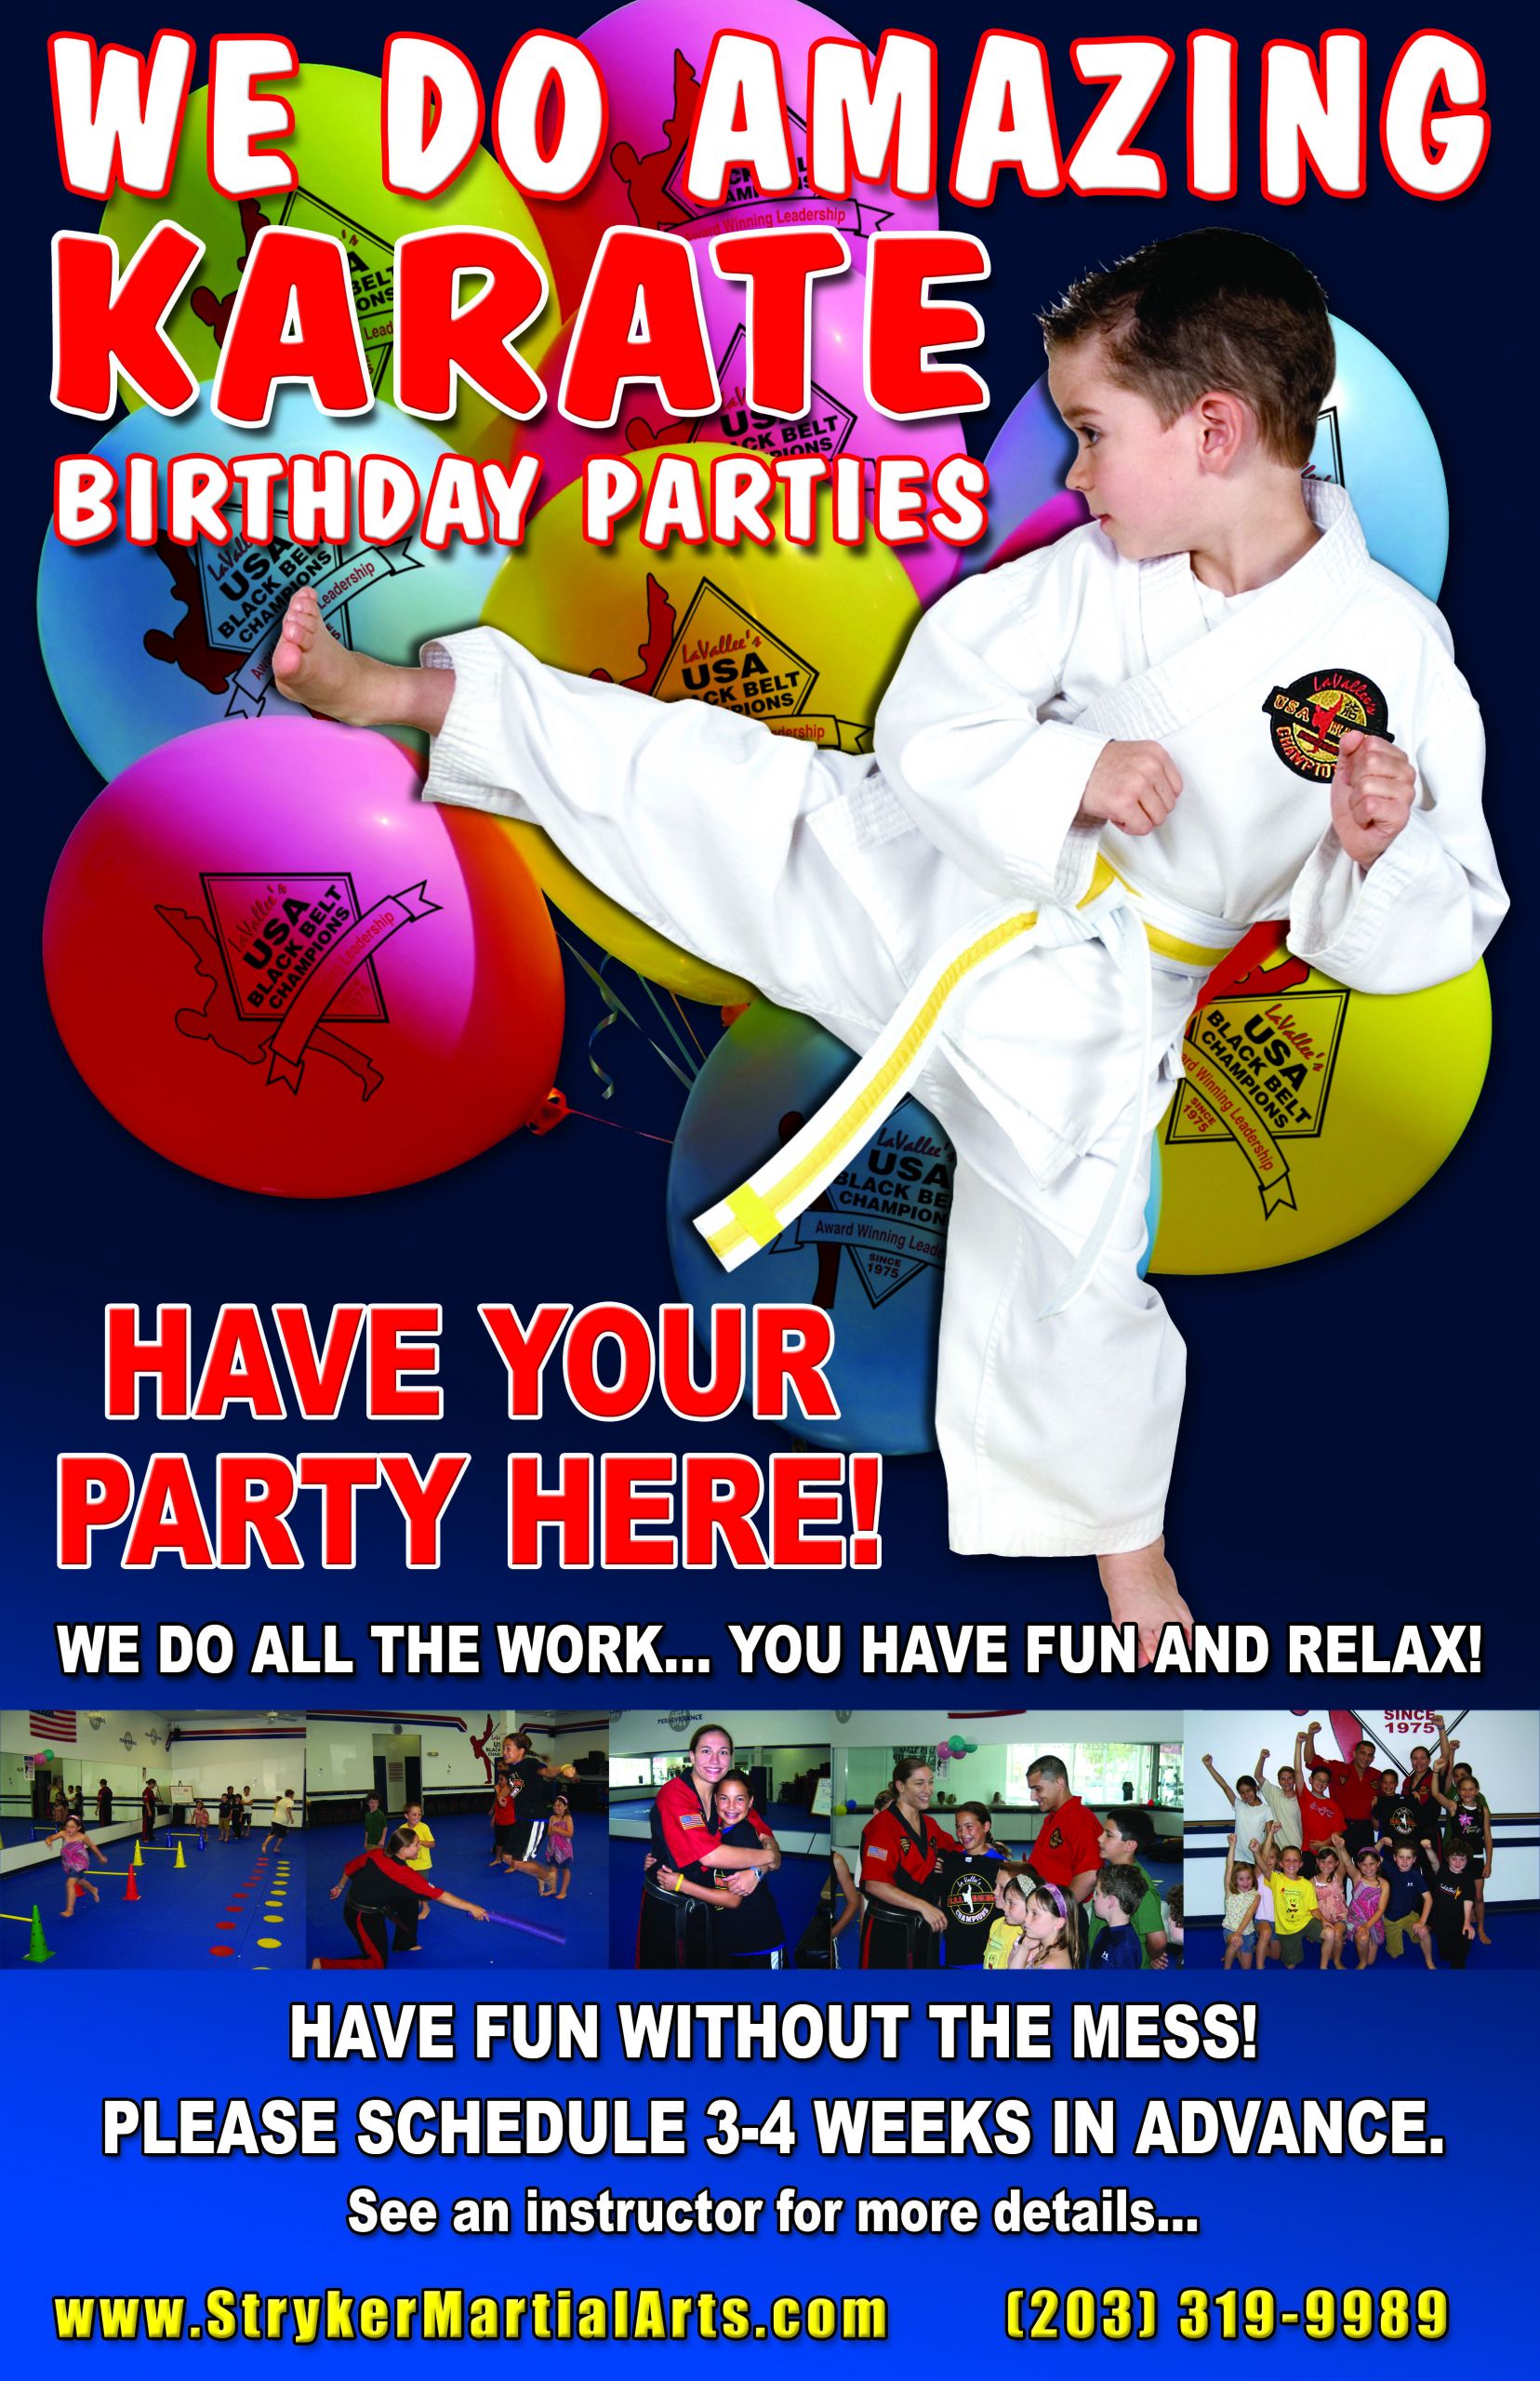 Taekwondo Birthday Party
 Back by Popular Demand – Our AMAZING Karate Birthday